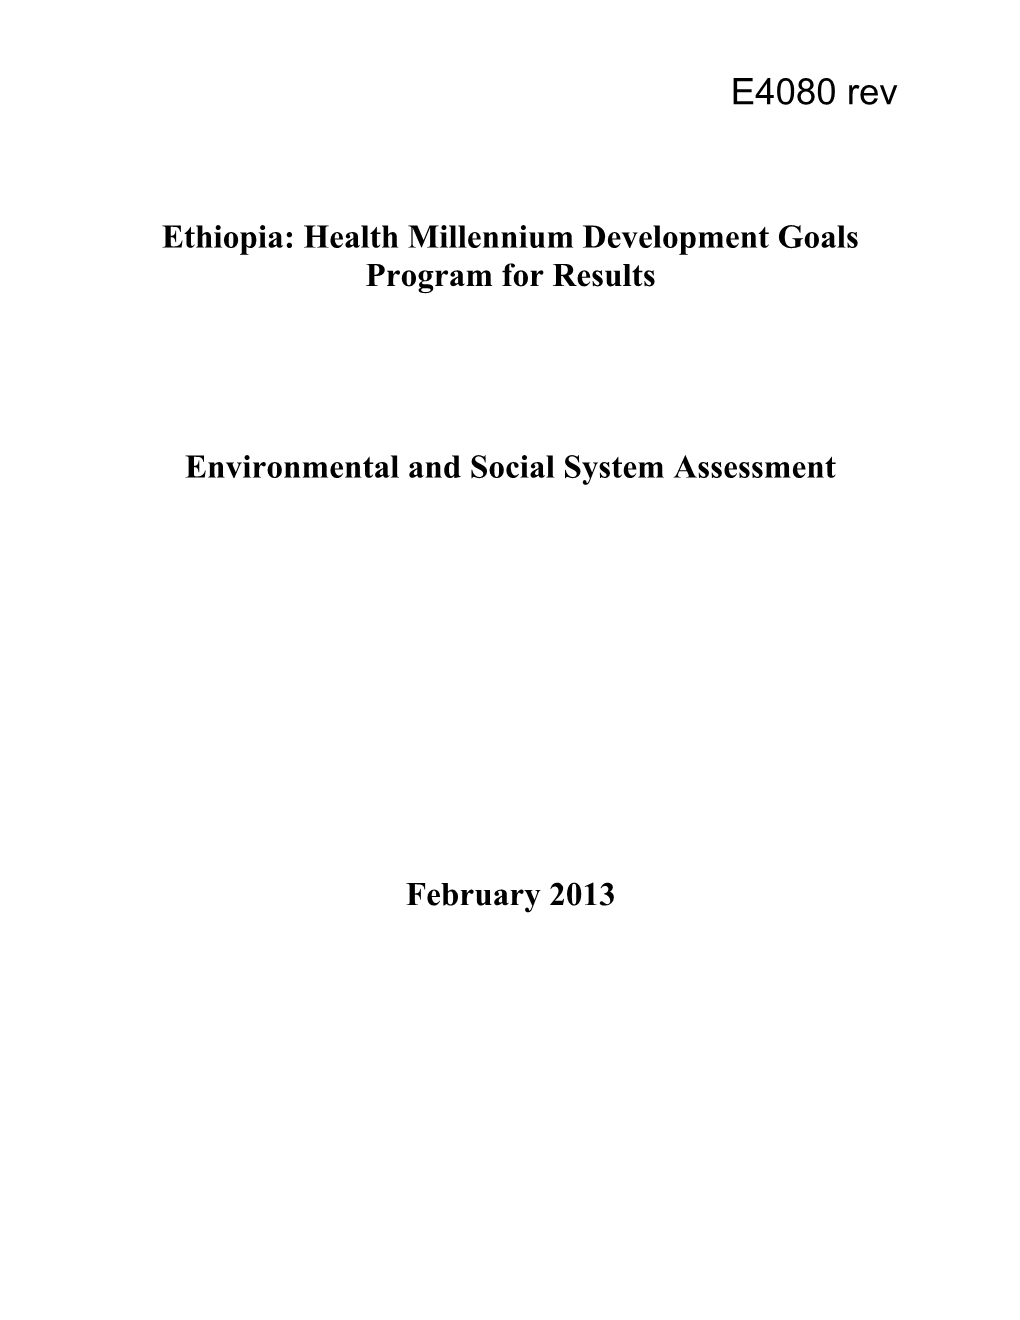 Ethiopia: Health Millennium Development Goals Program for Results